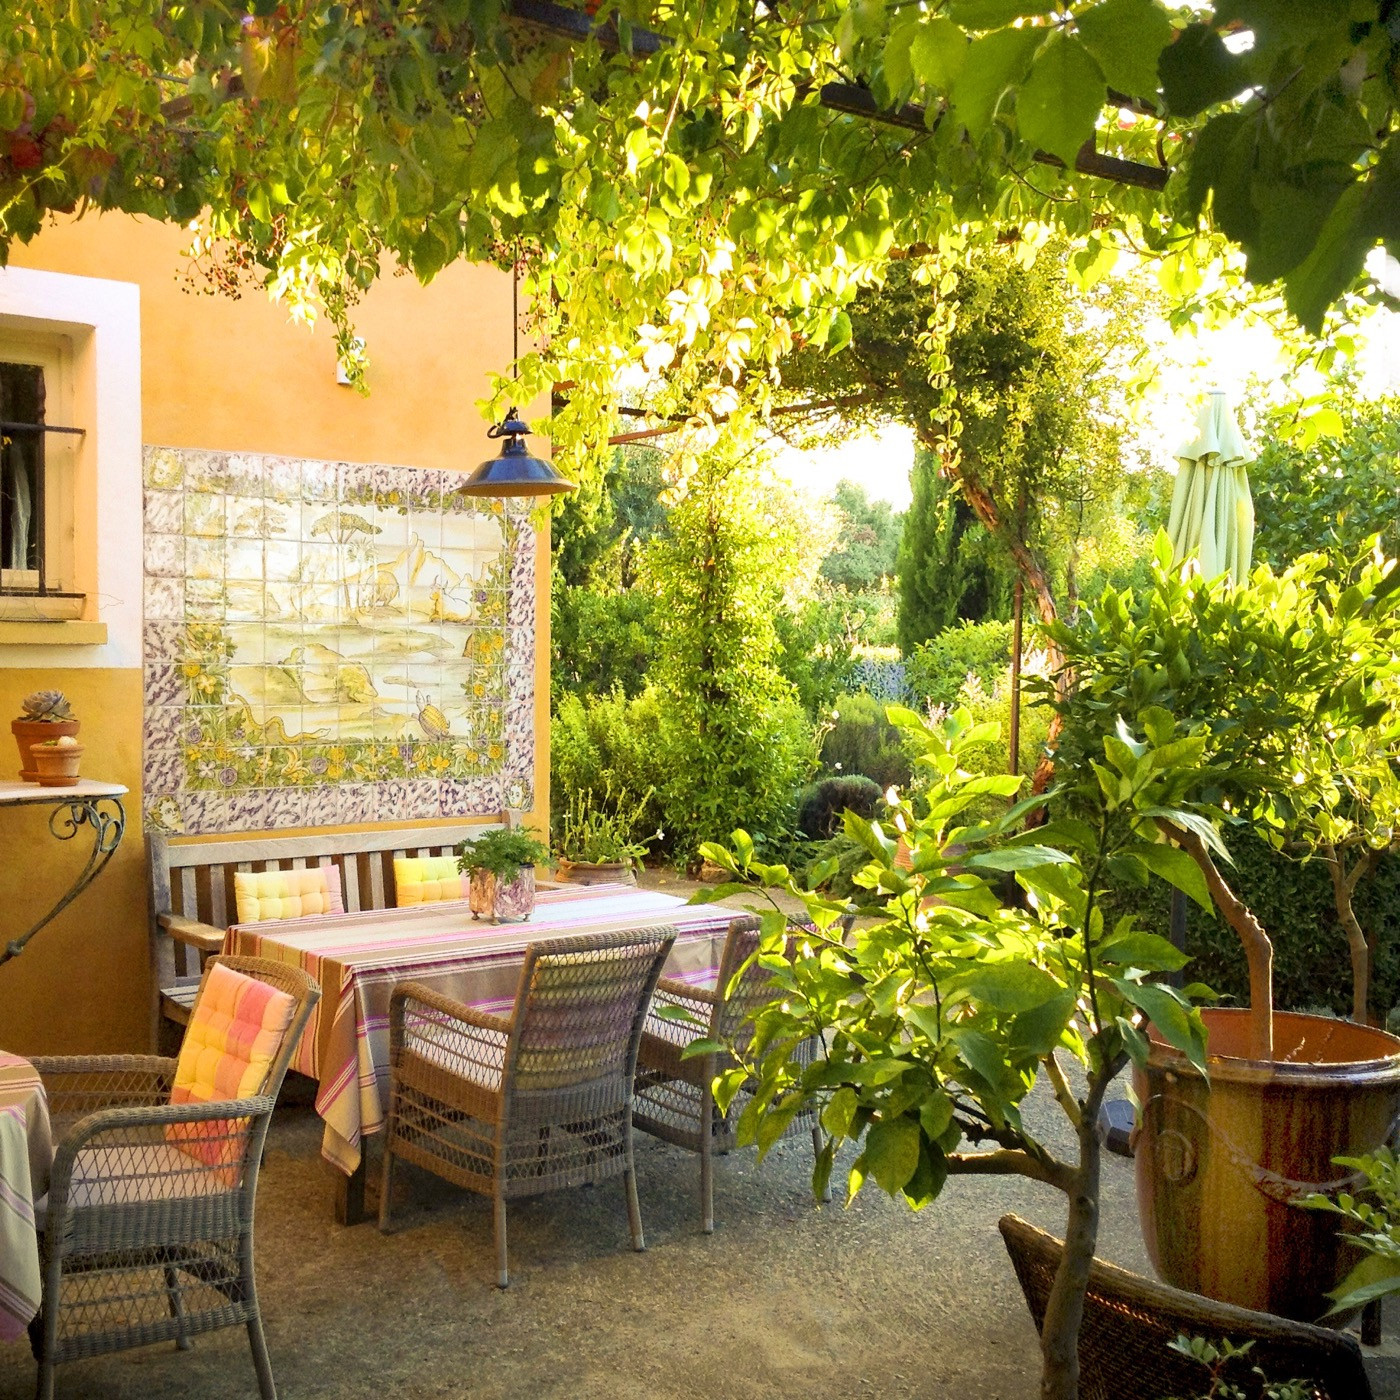 Le Pavillon de Galon - Your terrace for breakfast under the vines and between lemon trees